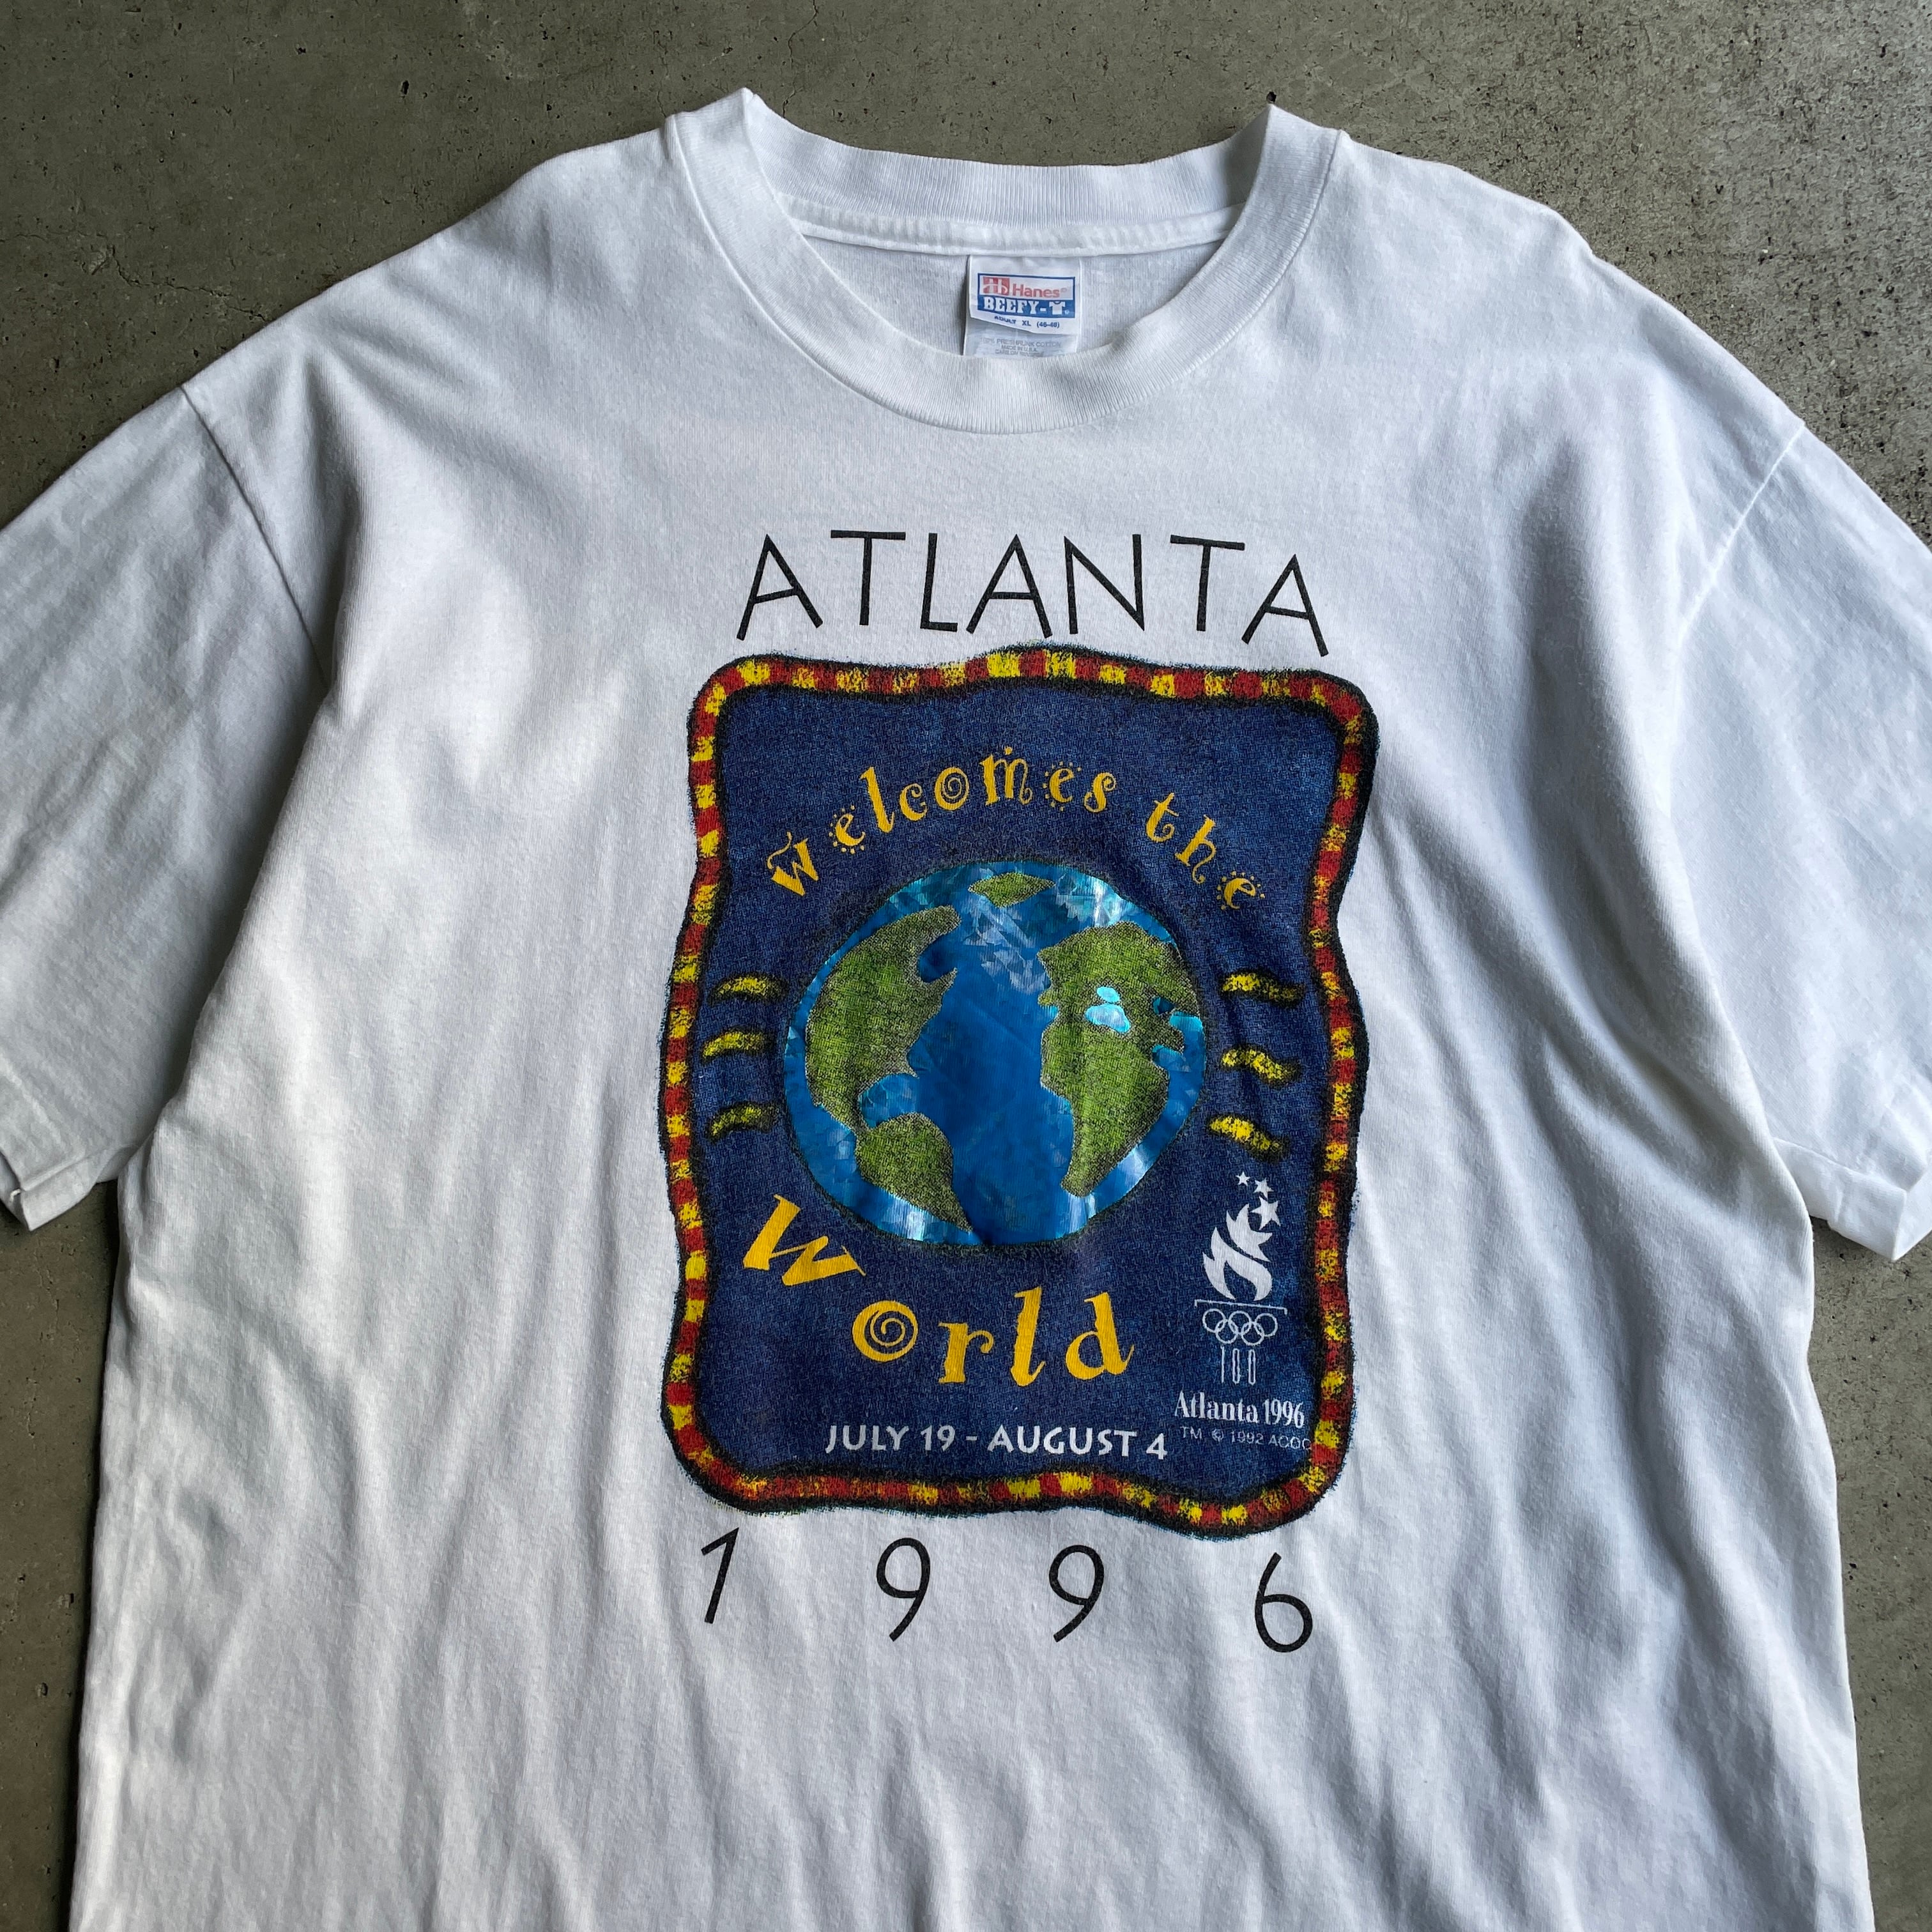 90s 1996 Atlanta Olympics プリントTシャツ